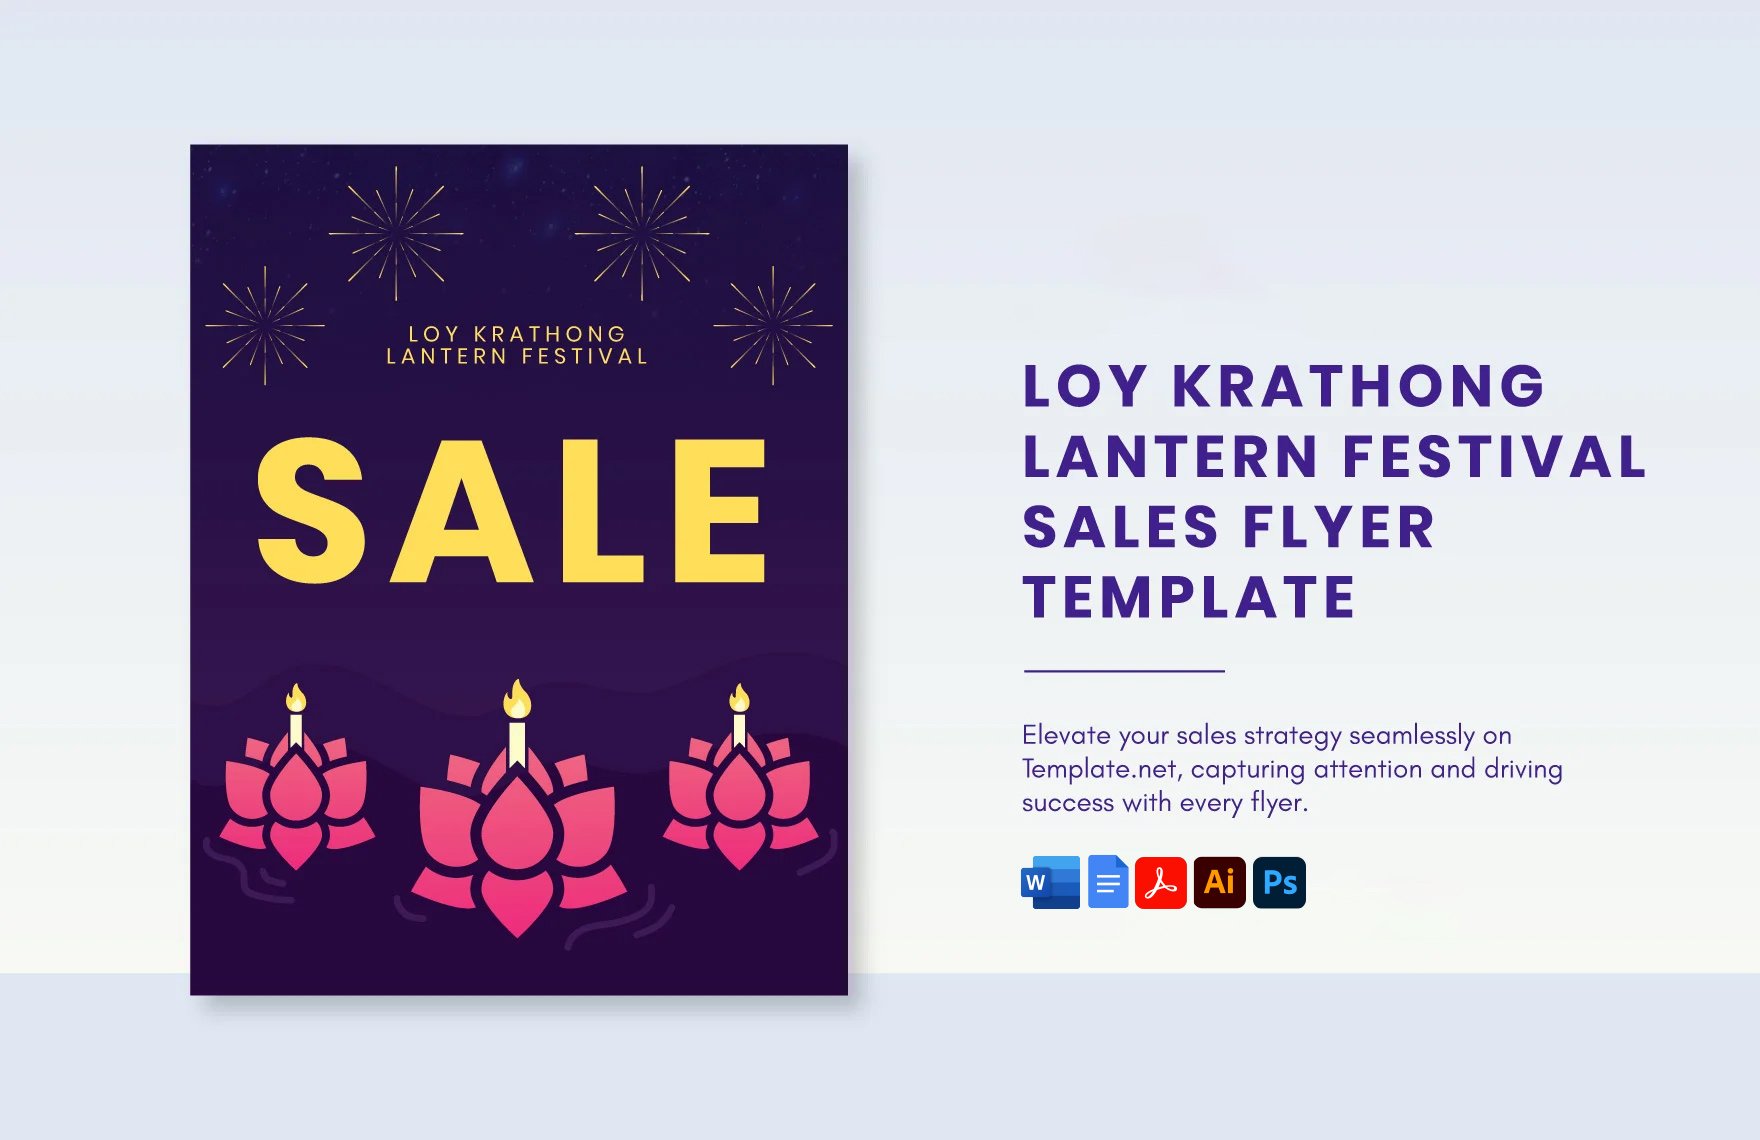 Free Loy Krathong Lantern Festival Sales Flyer Template in Word, Google Docs, PDF, Illustrator, PSD